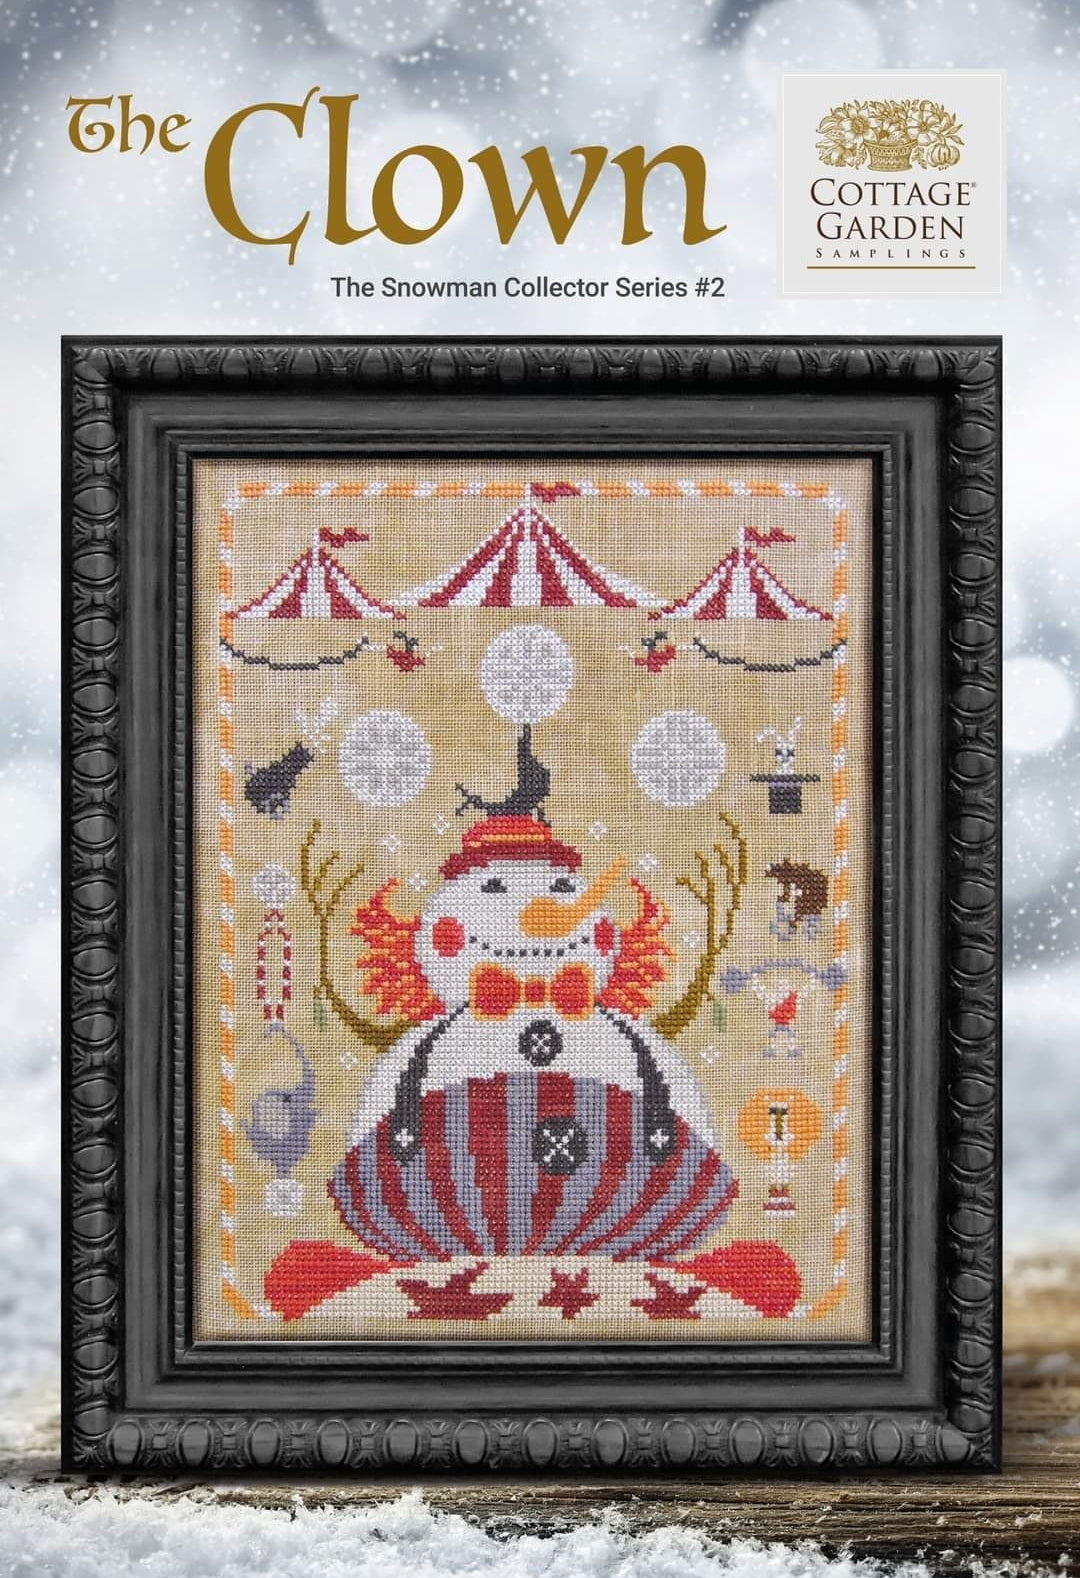 Snowman Collector #2 The Clown - Cross Stitch Pattern by Cottage Garden Samplings